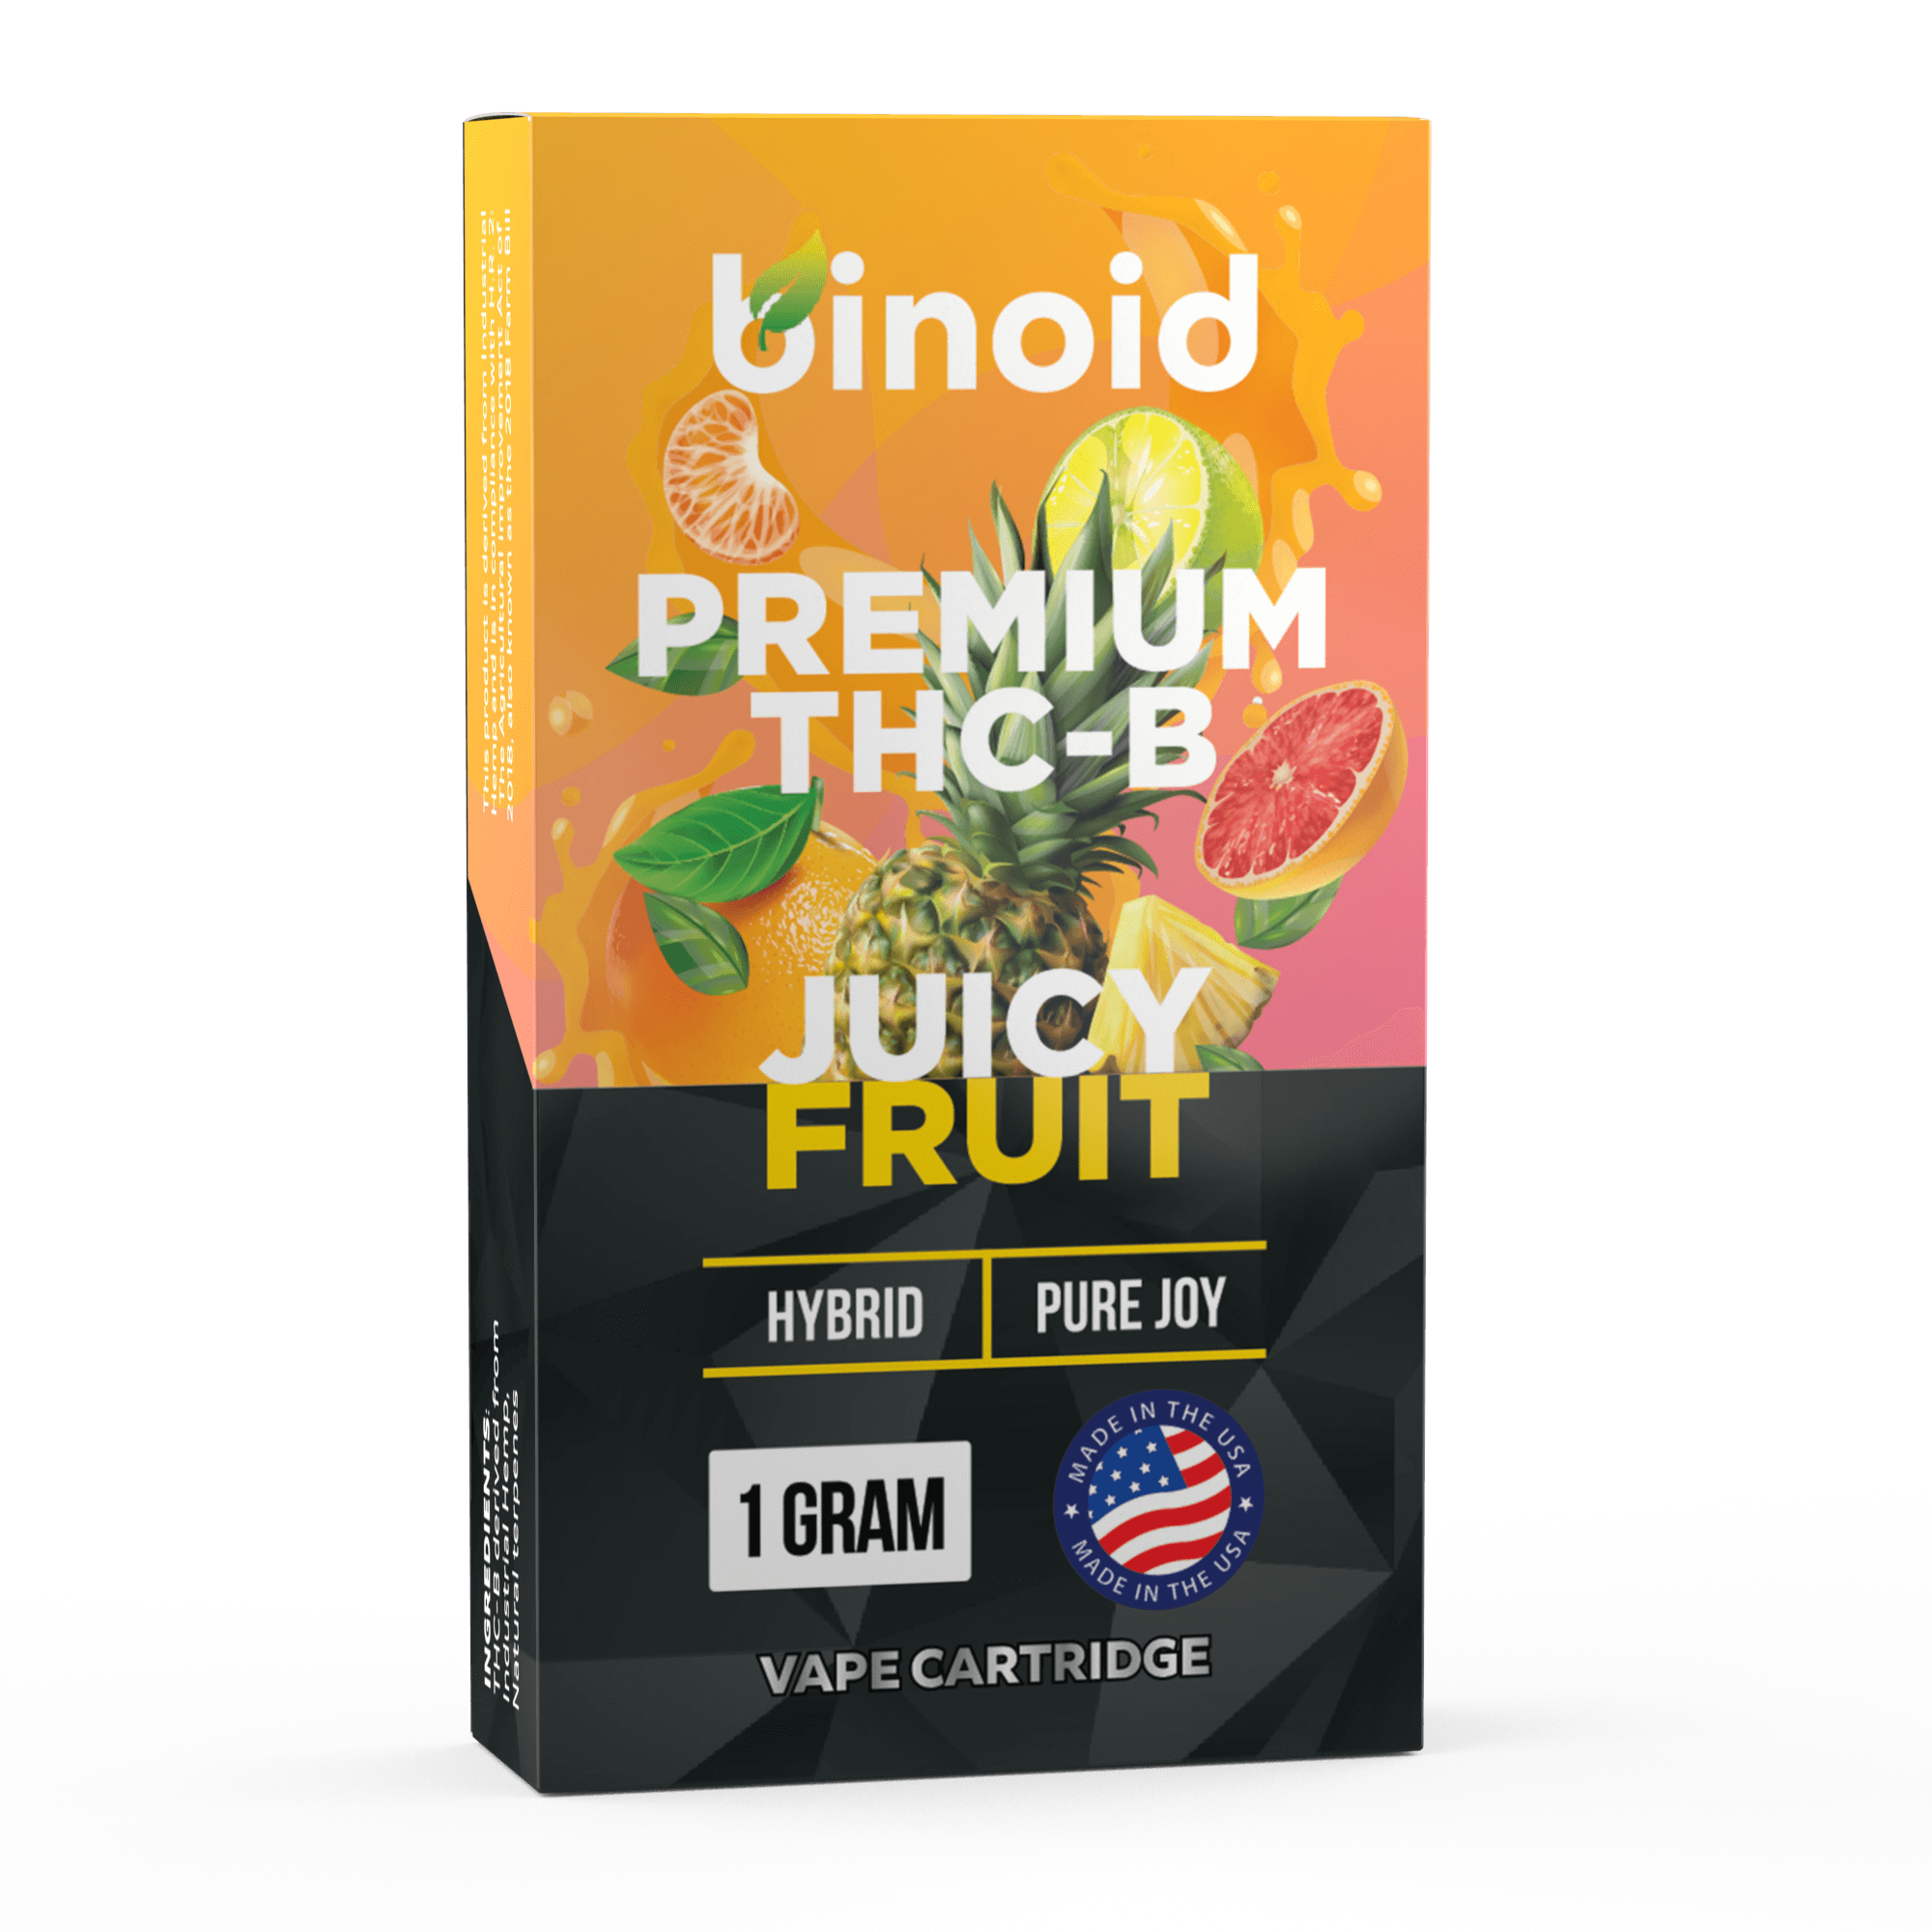 Binoid THC-B Vape Cartridge - Juicy Fruit Best Price